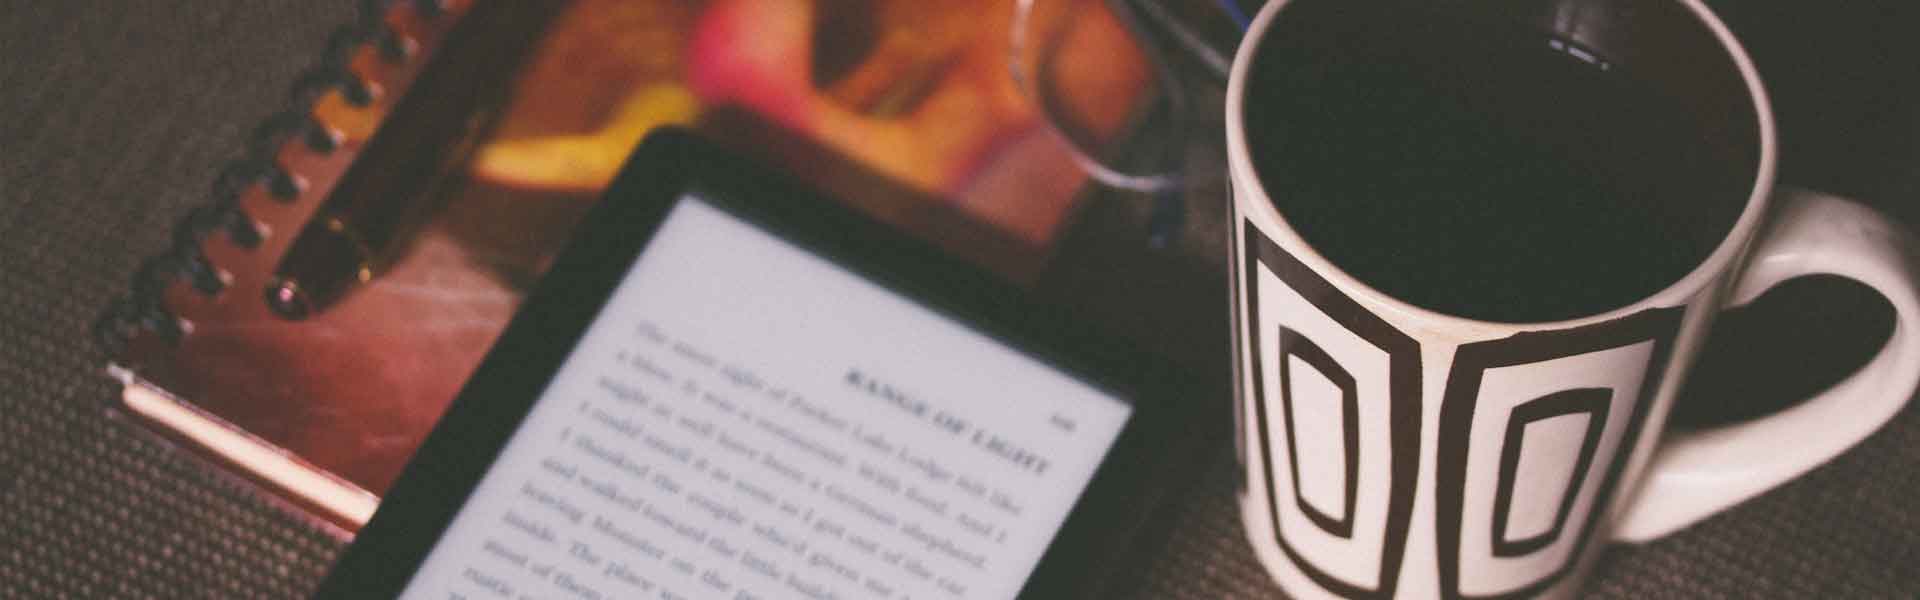 e-reader and mug